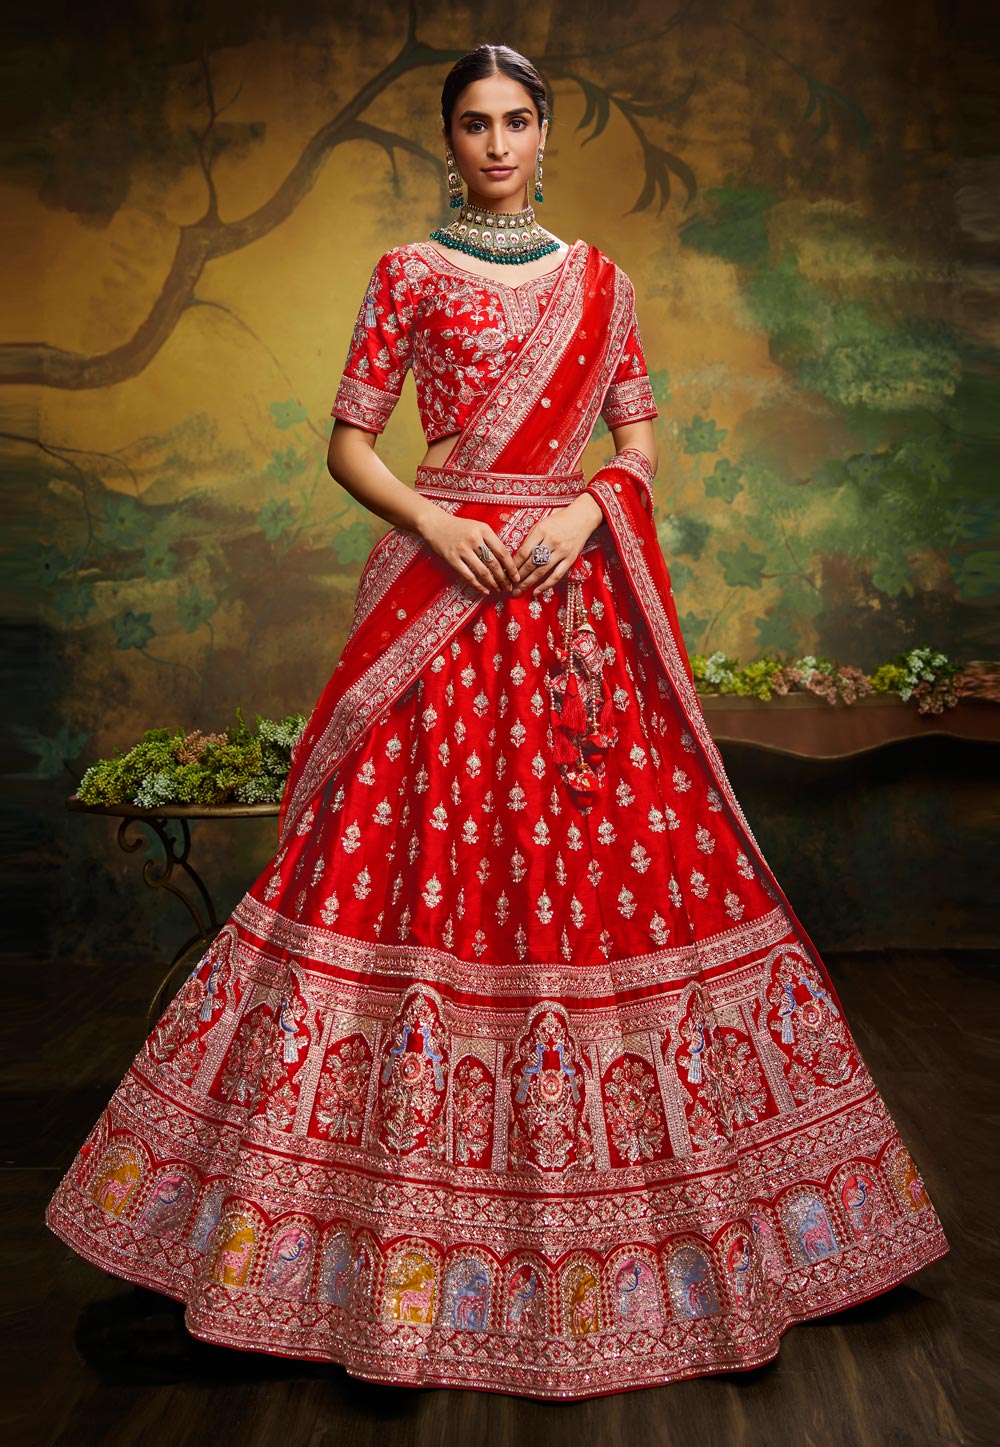 1601 Shubhkala Bridesmaid Lehenga Choli at Rs 3000 | Designer Lehenga Choli  in Surat | ID: 2851253638948